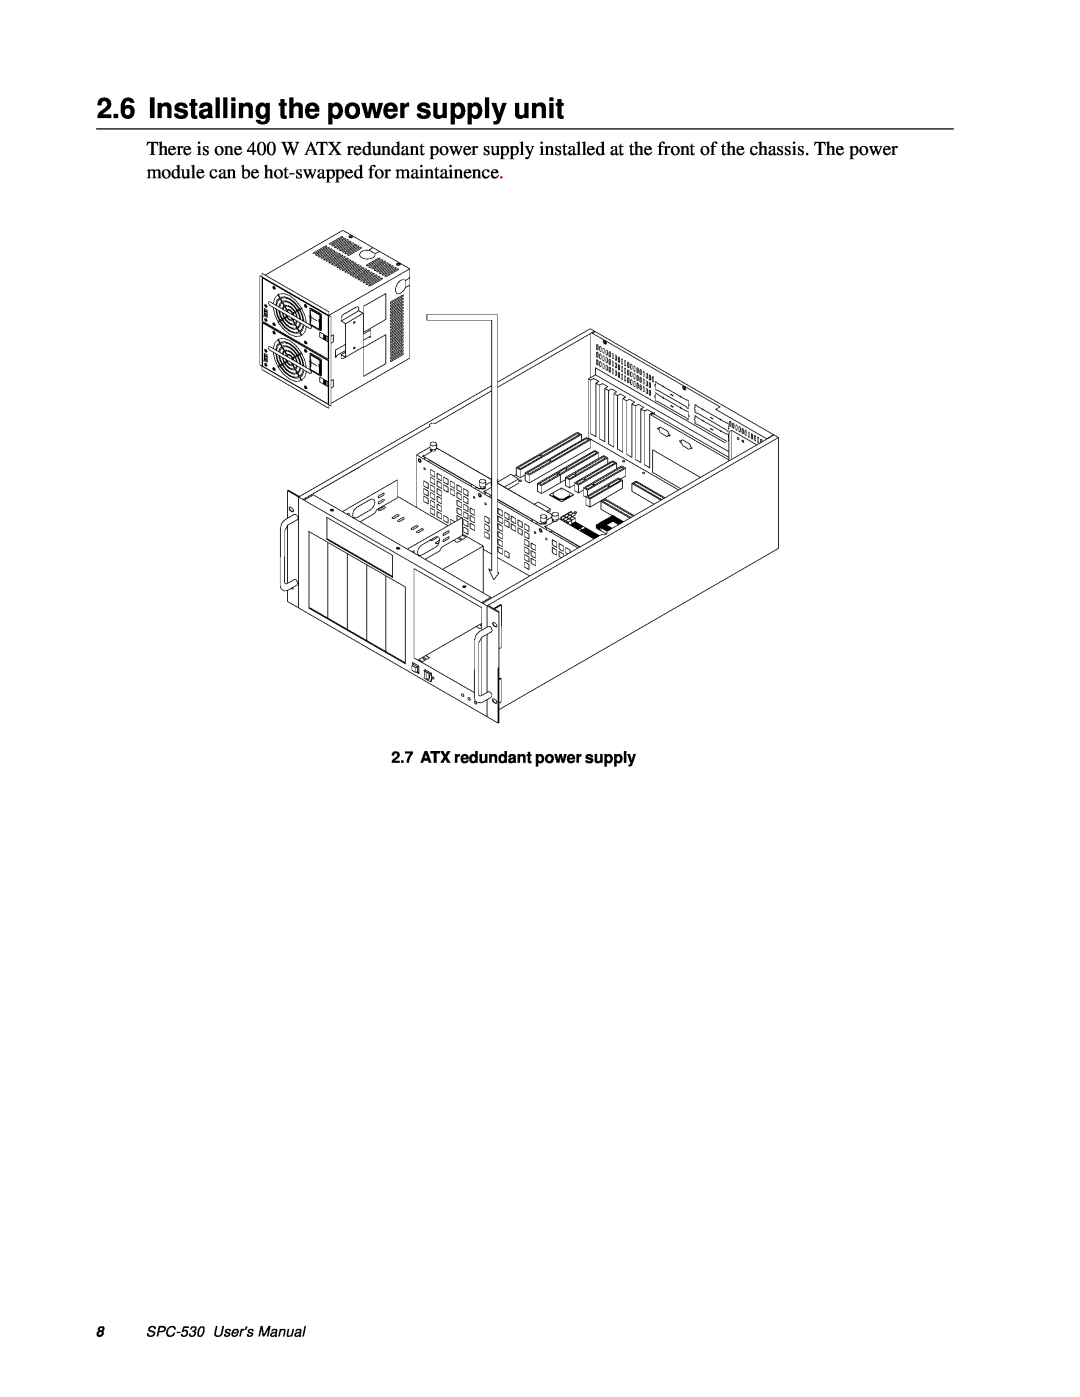 Advantech user manual Installing the power supply unit, ATX redundant power supply, SPC-530 Users Manual 